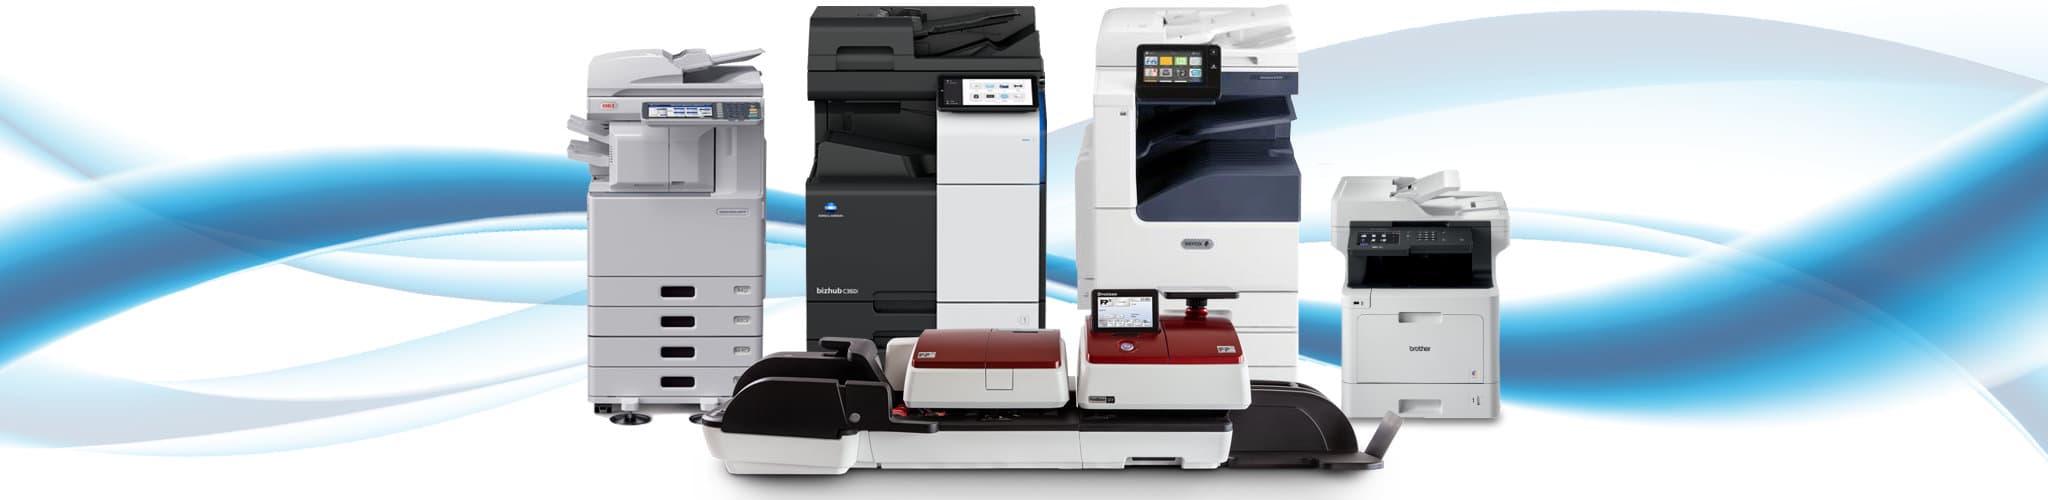 Bridgeport carries a wide range of copiers and printers